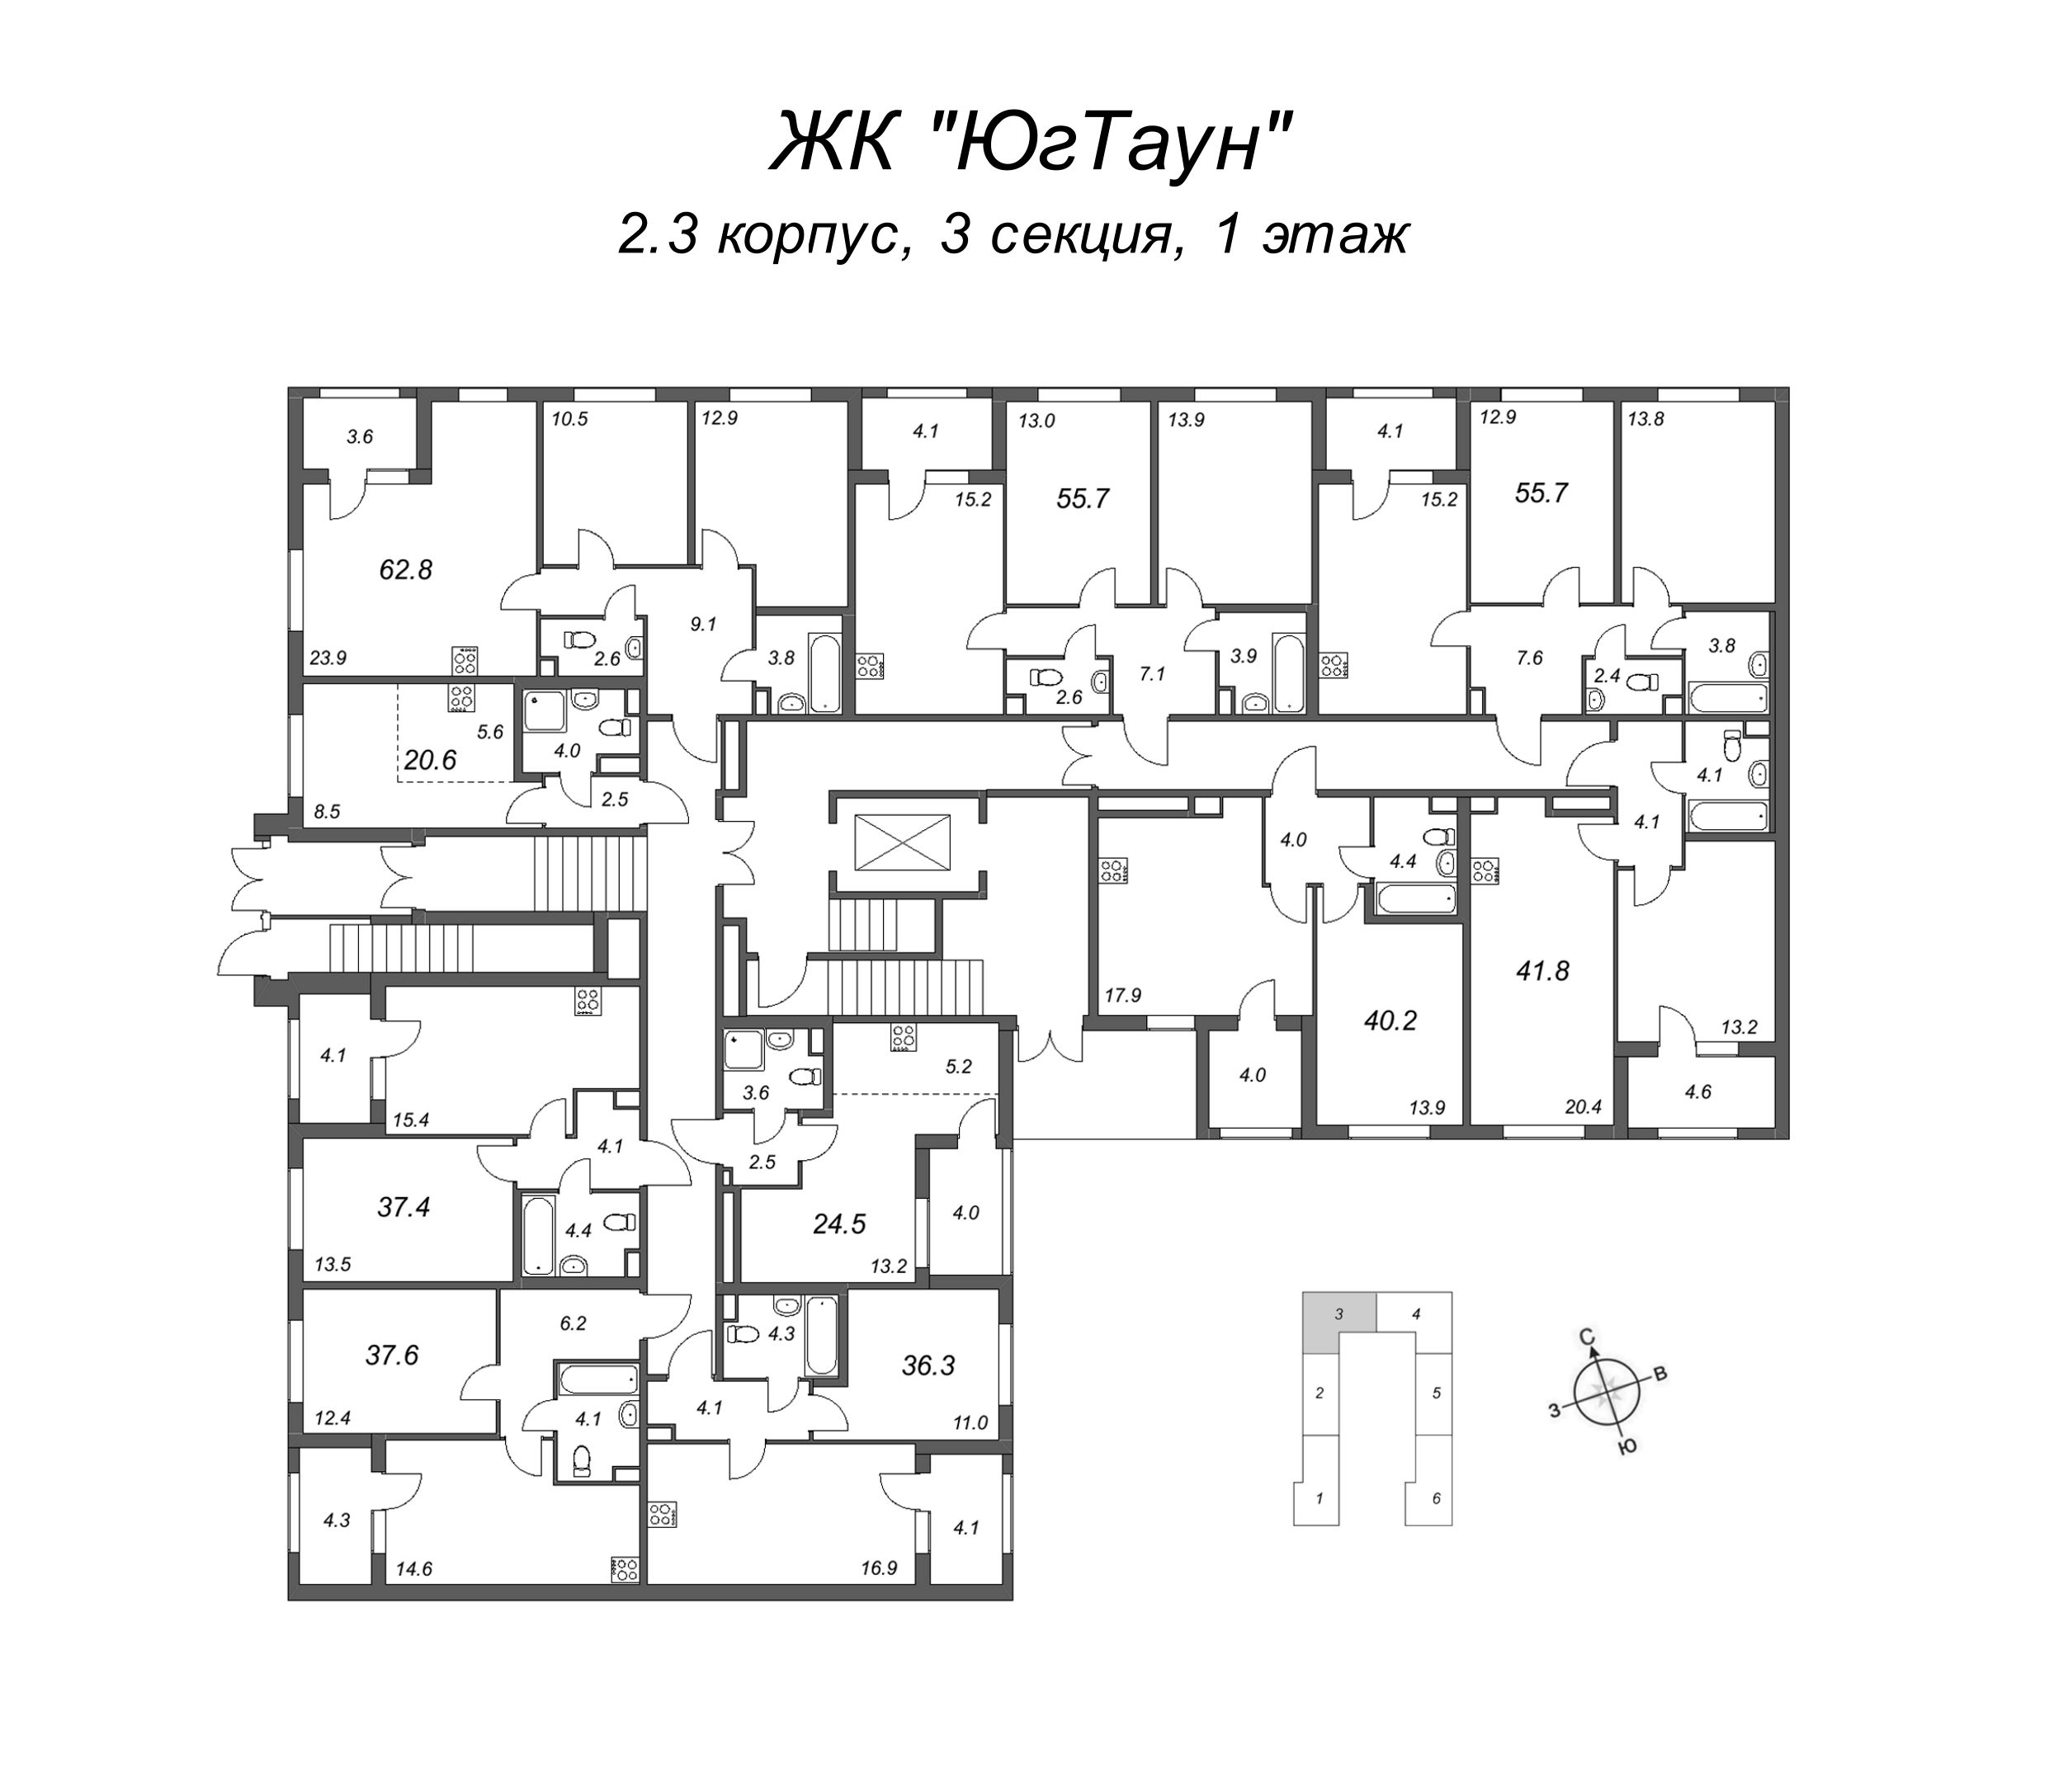 2-комнатная (Евро) квартира, 36.3 м² - планировка этажа